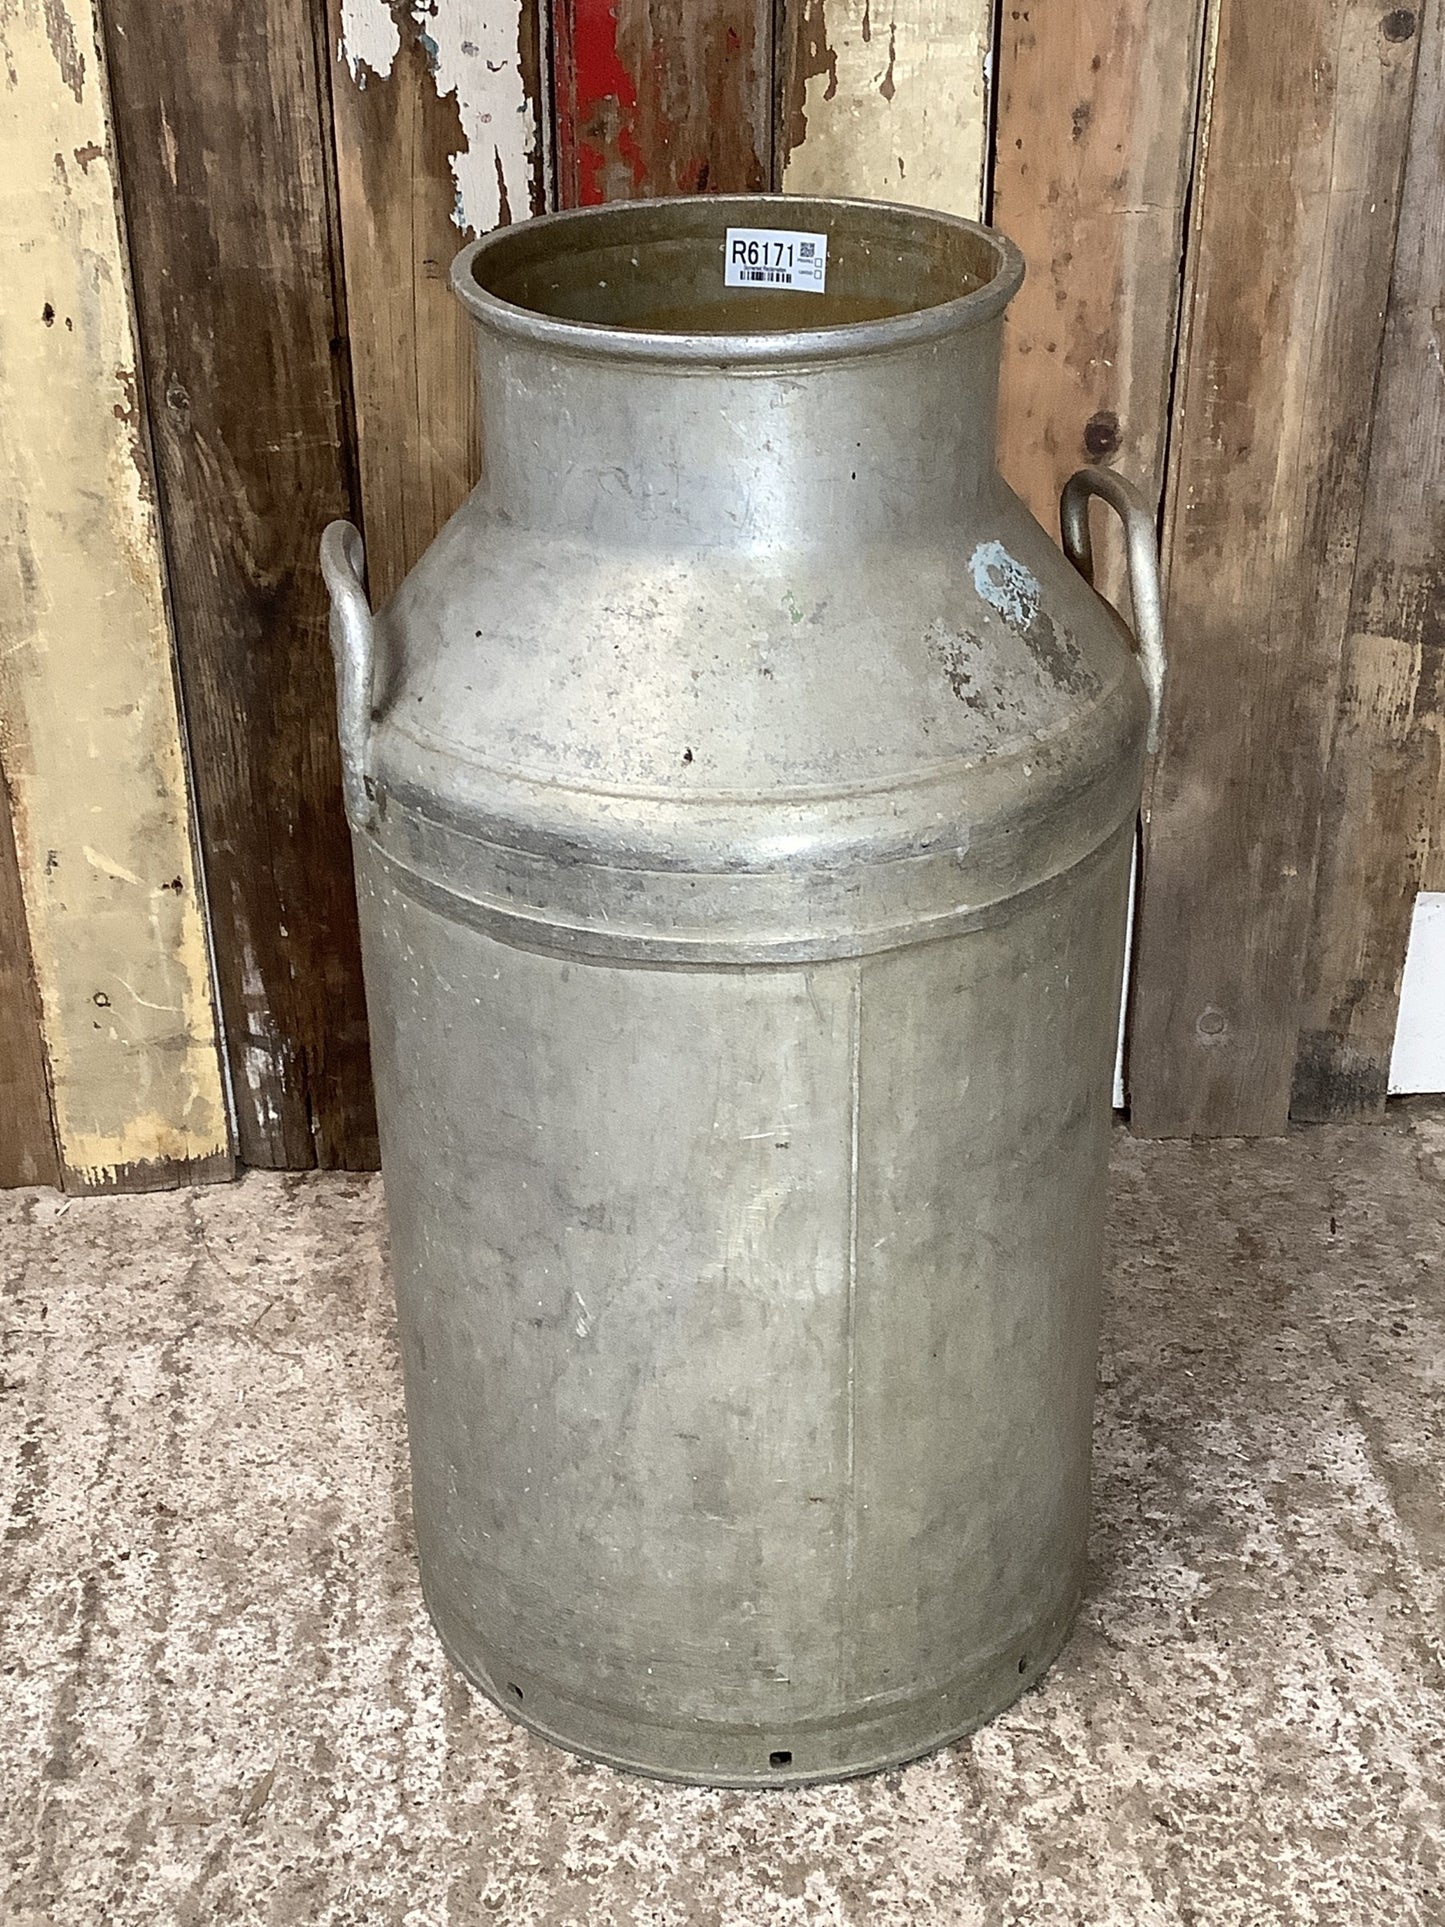 10 Gallon Old Tarnished Aluminium Milk Churn  Planter with Metal Handles 2'1"H